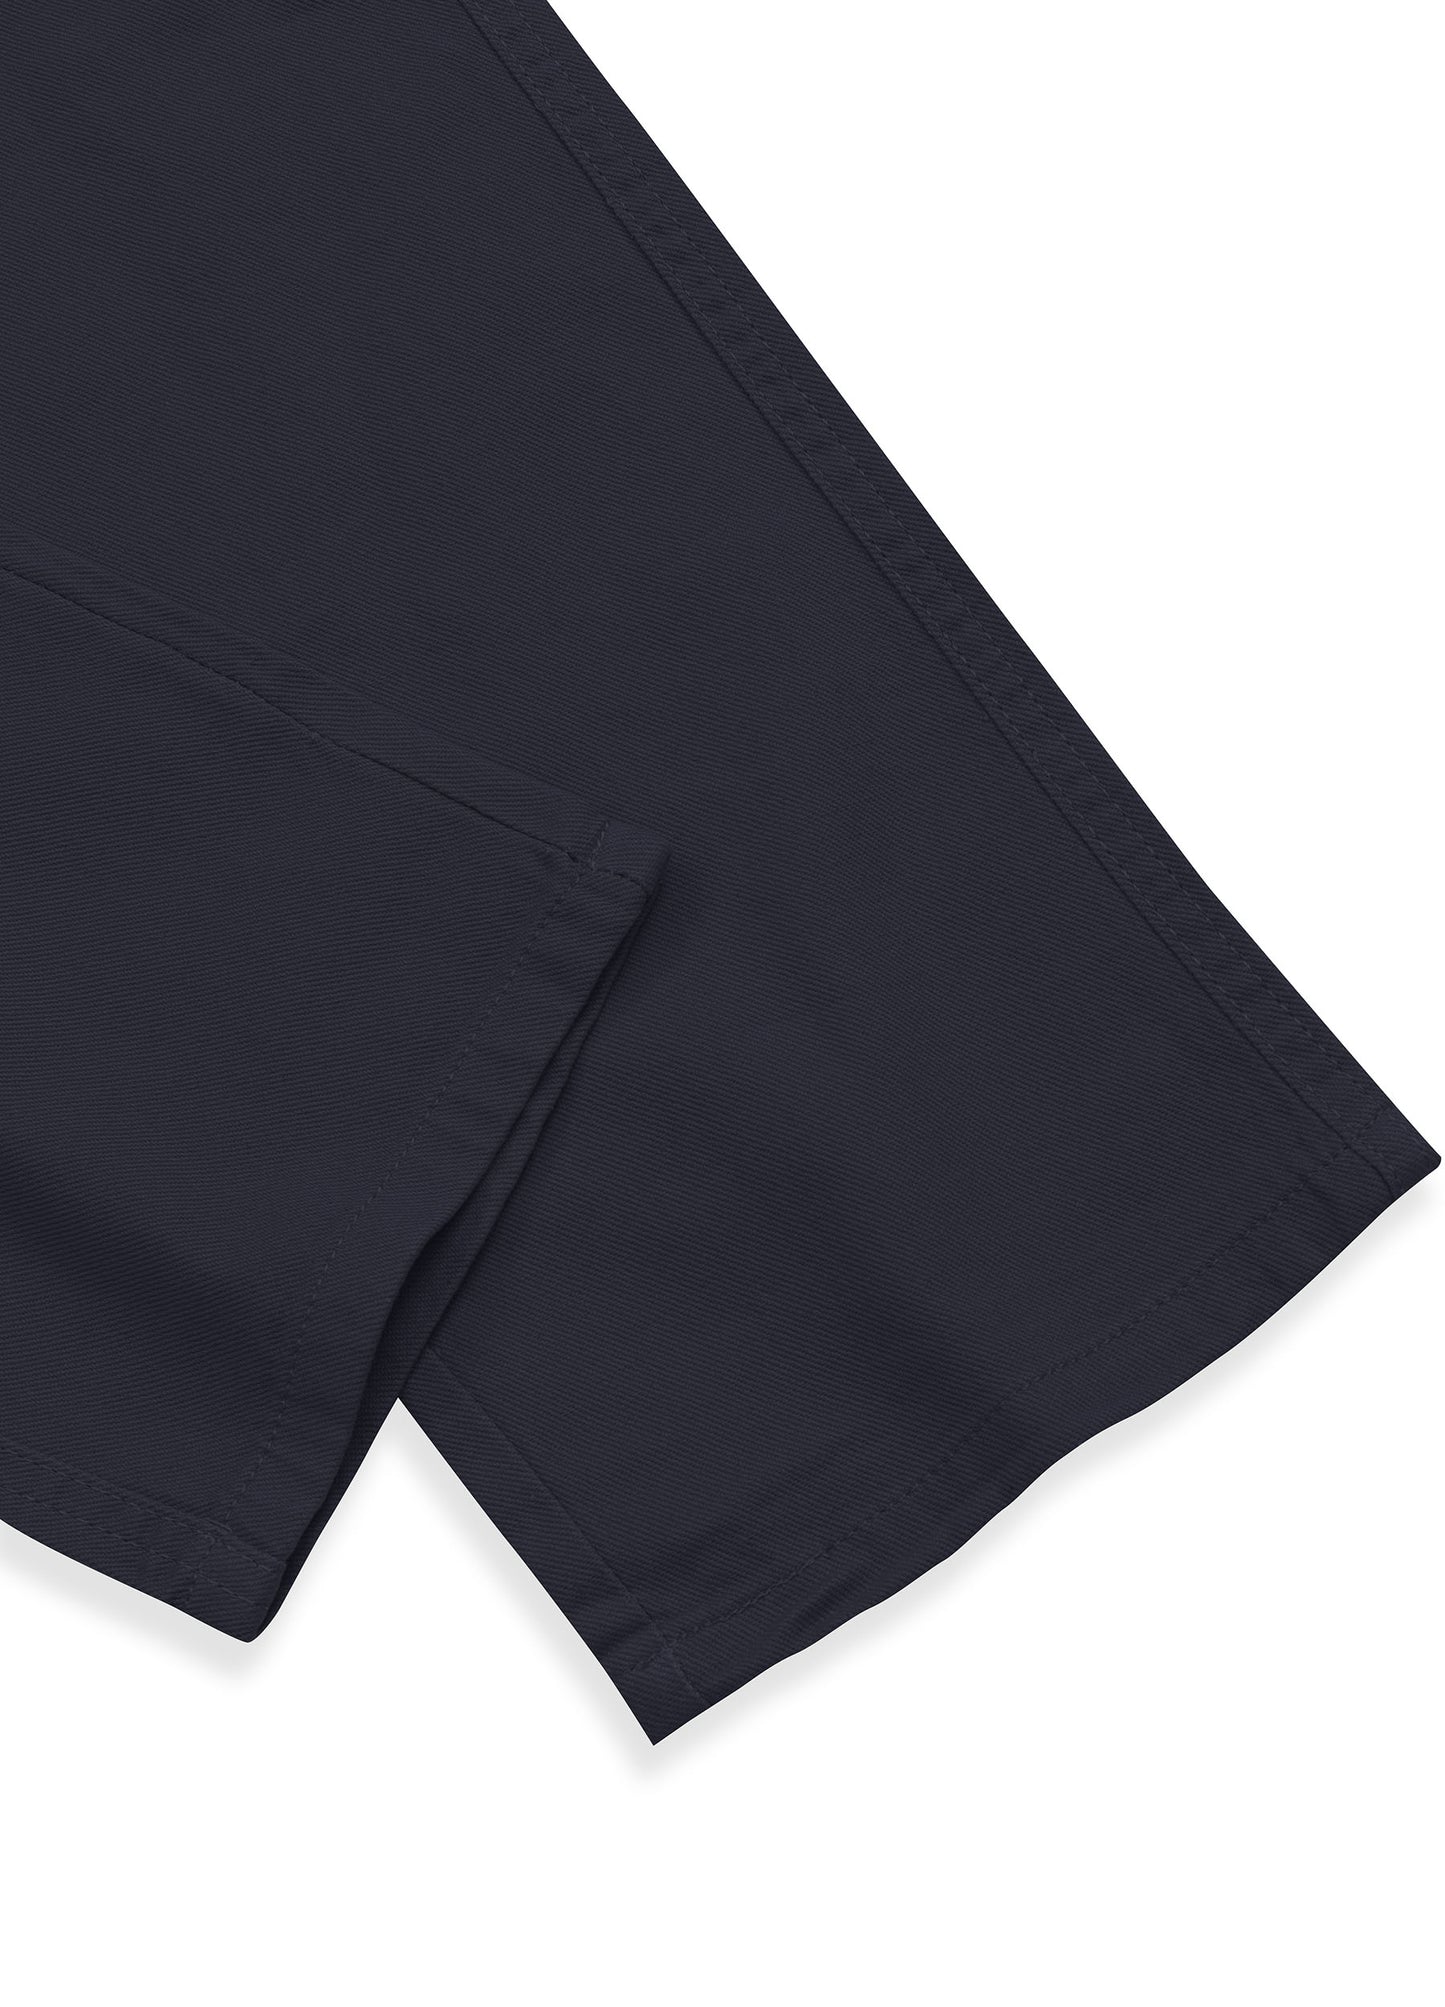 1PA1 Men's Fall Straight Leg Zip Fly Button Closure Slant Pocket Casual Trousers-Black pant leg